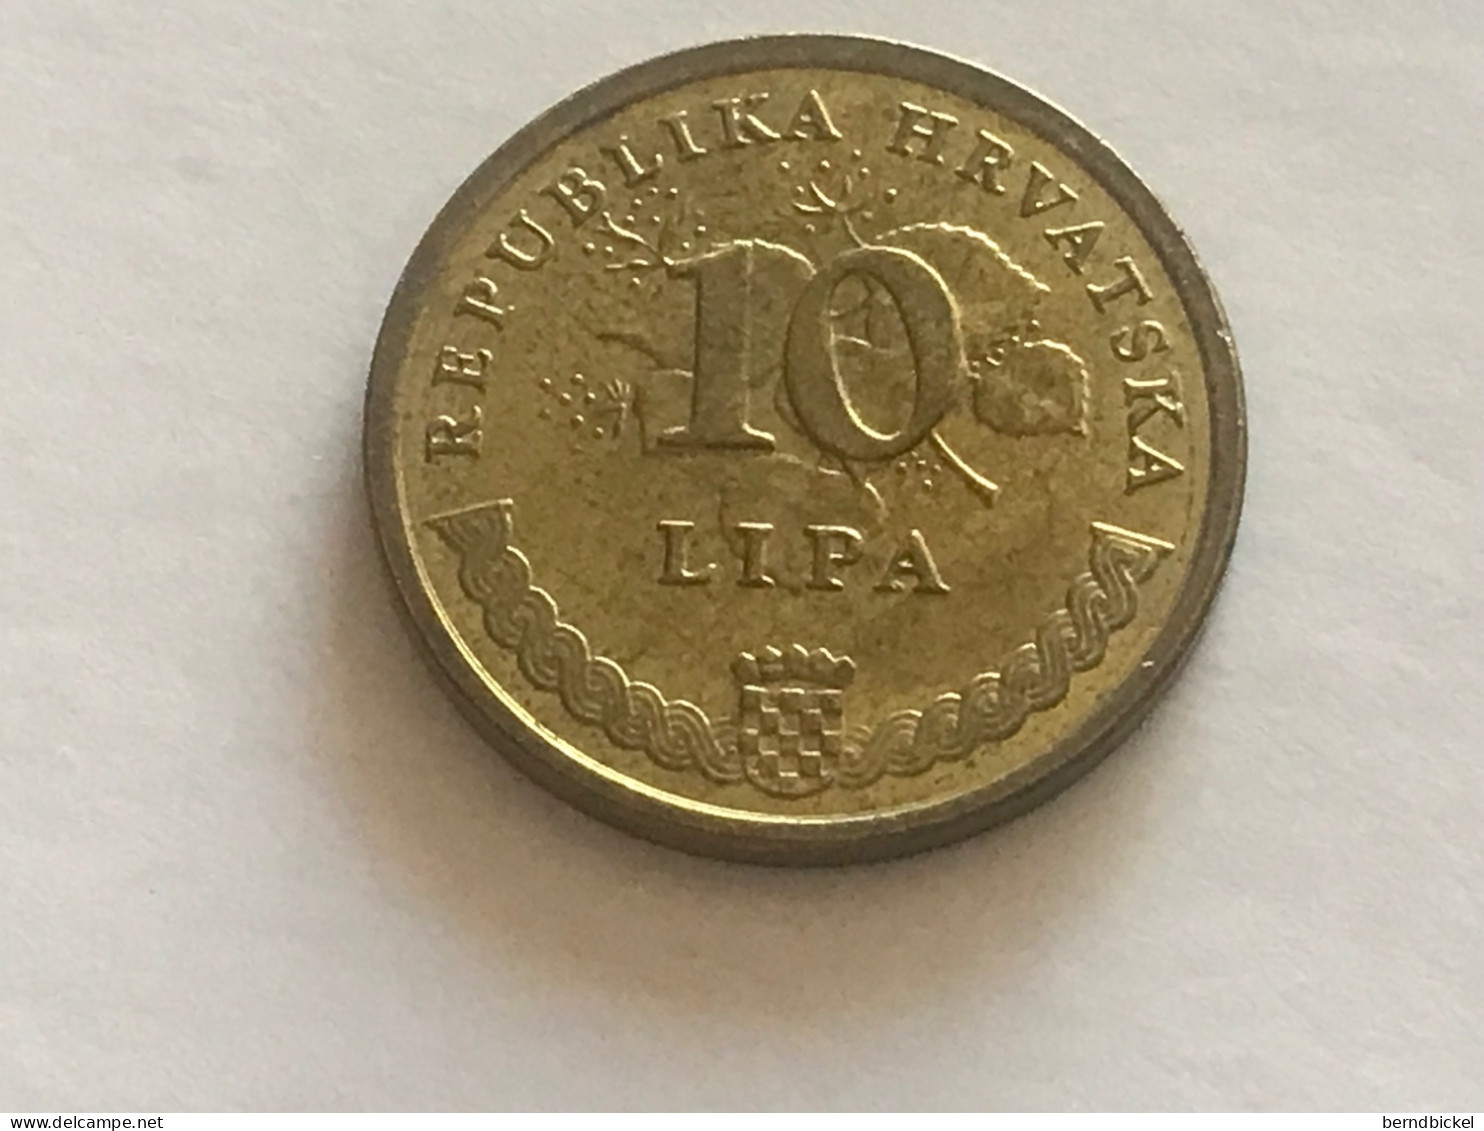 Münze Münzen Umlaufmünze Kroatien 10 Lipa 2015 - Croatia